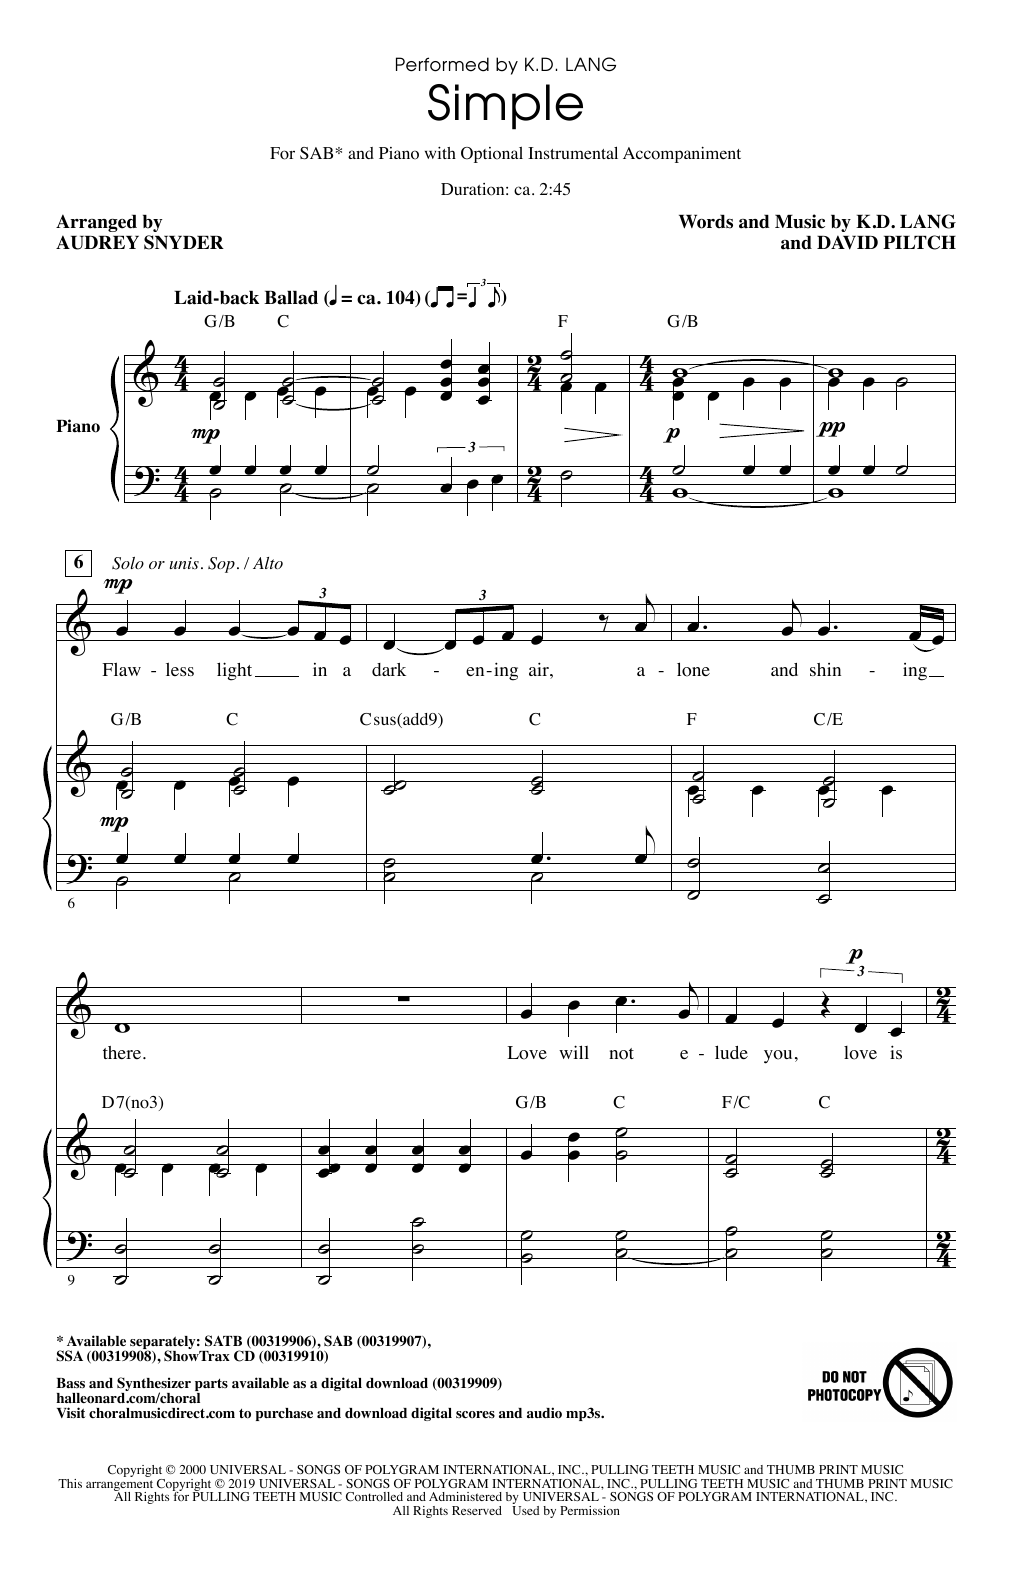 k.d. lang Simple (arr. Audrey Snyder) Sheet Music Notes & Chords for SATB Choir - Download or Print PDF